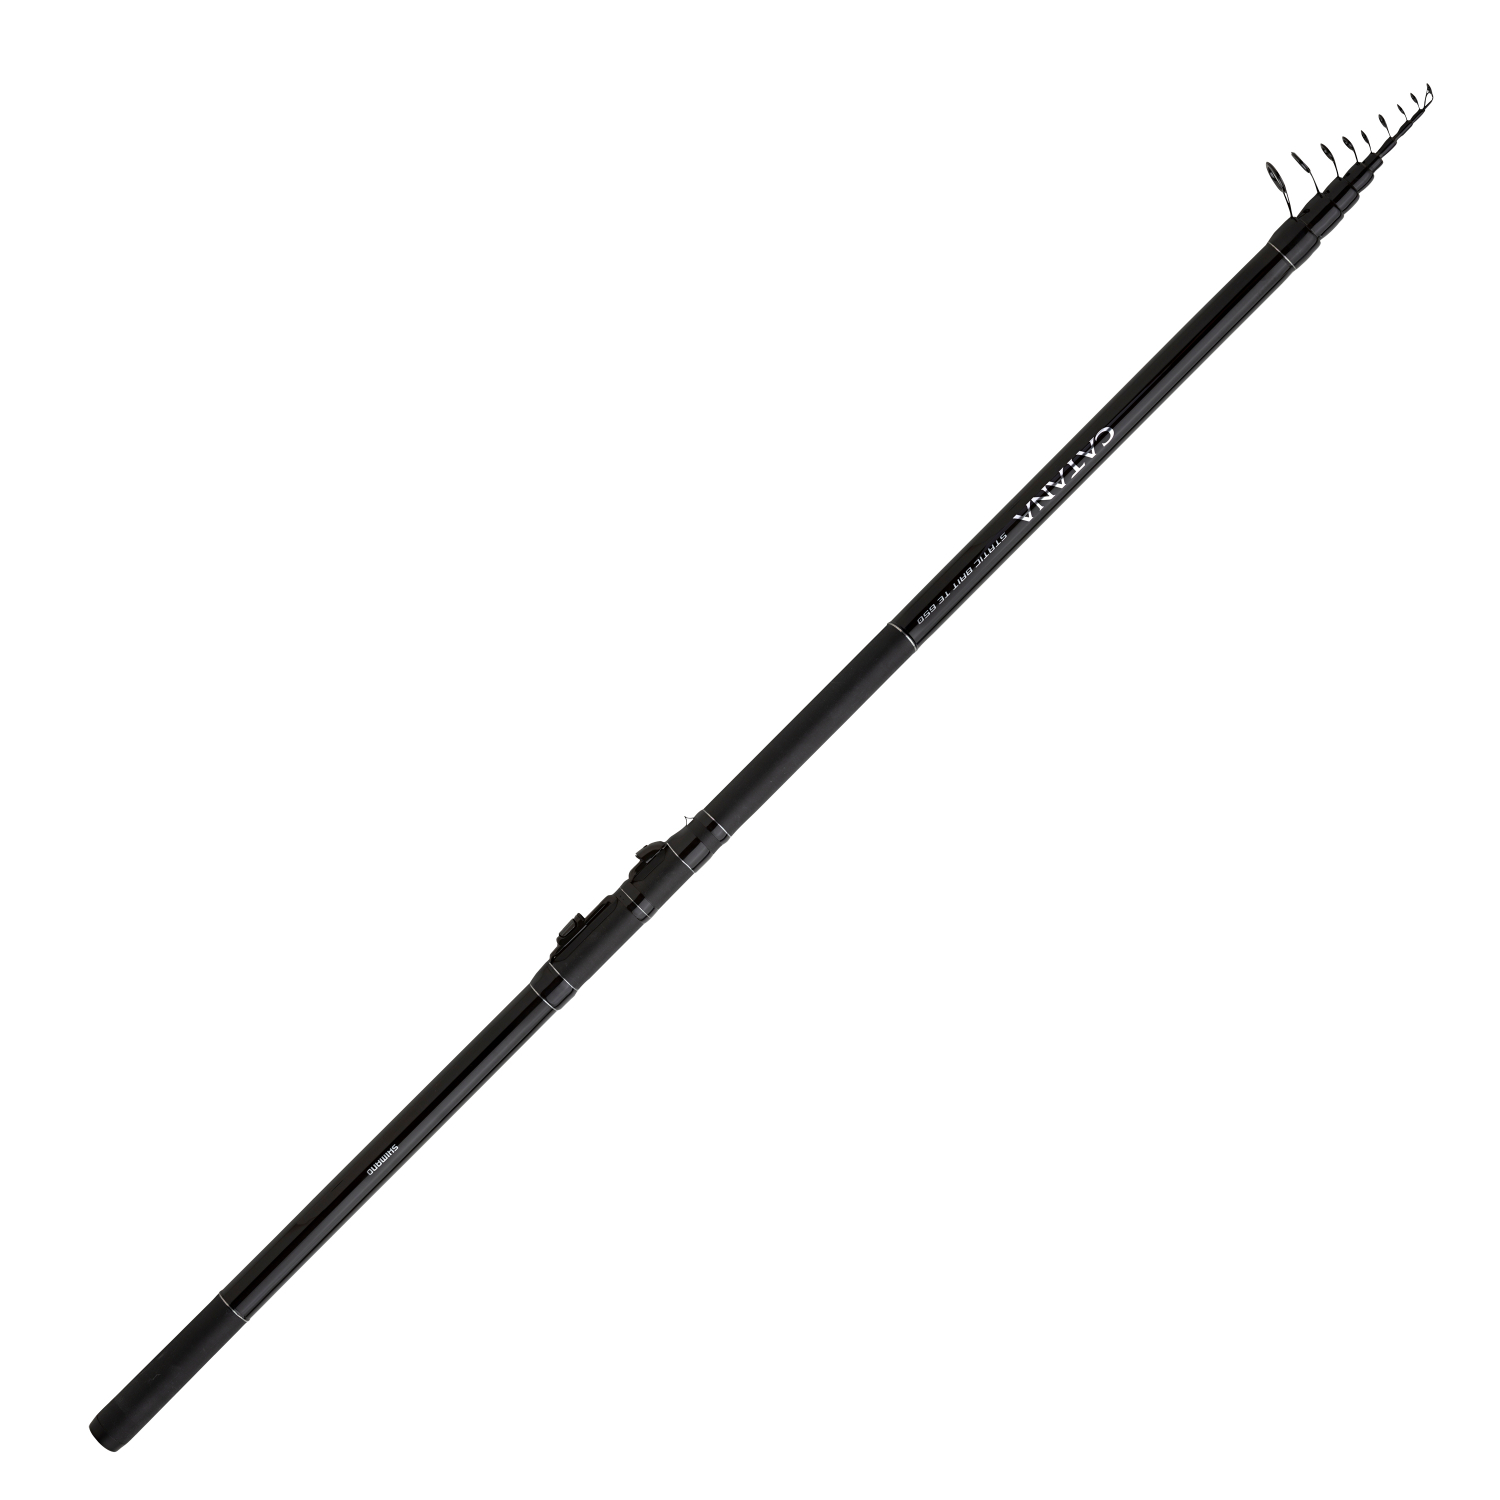 https://images.askari-sport.com/en/product/1/large/shimano-fishing-rod-catana-static-bait.jpg